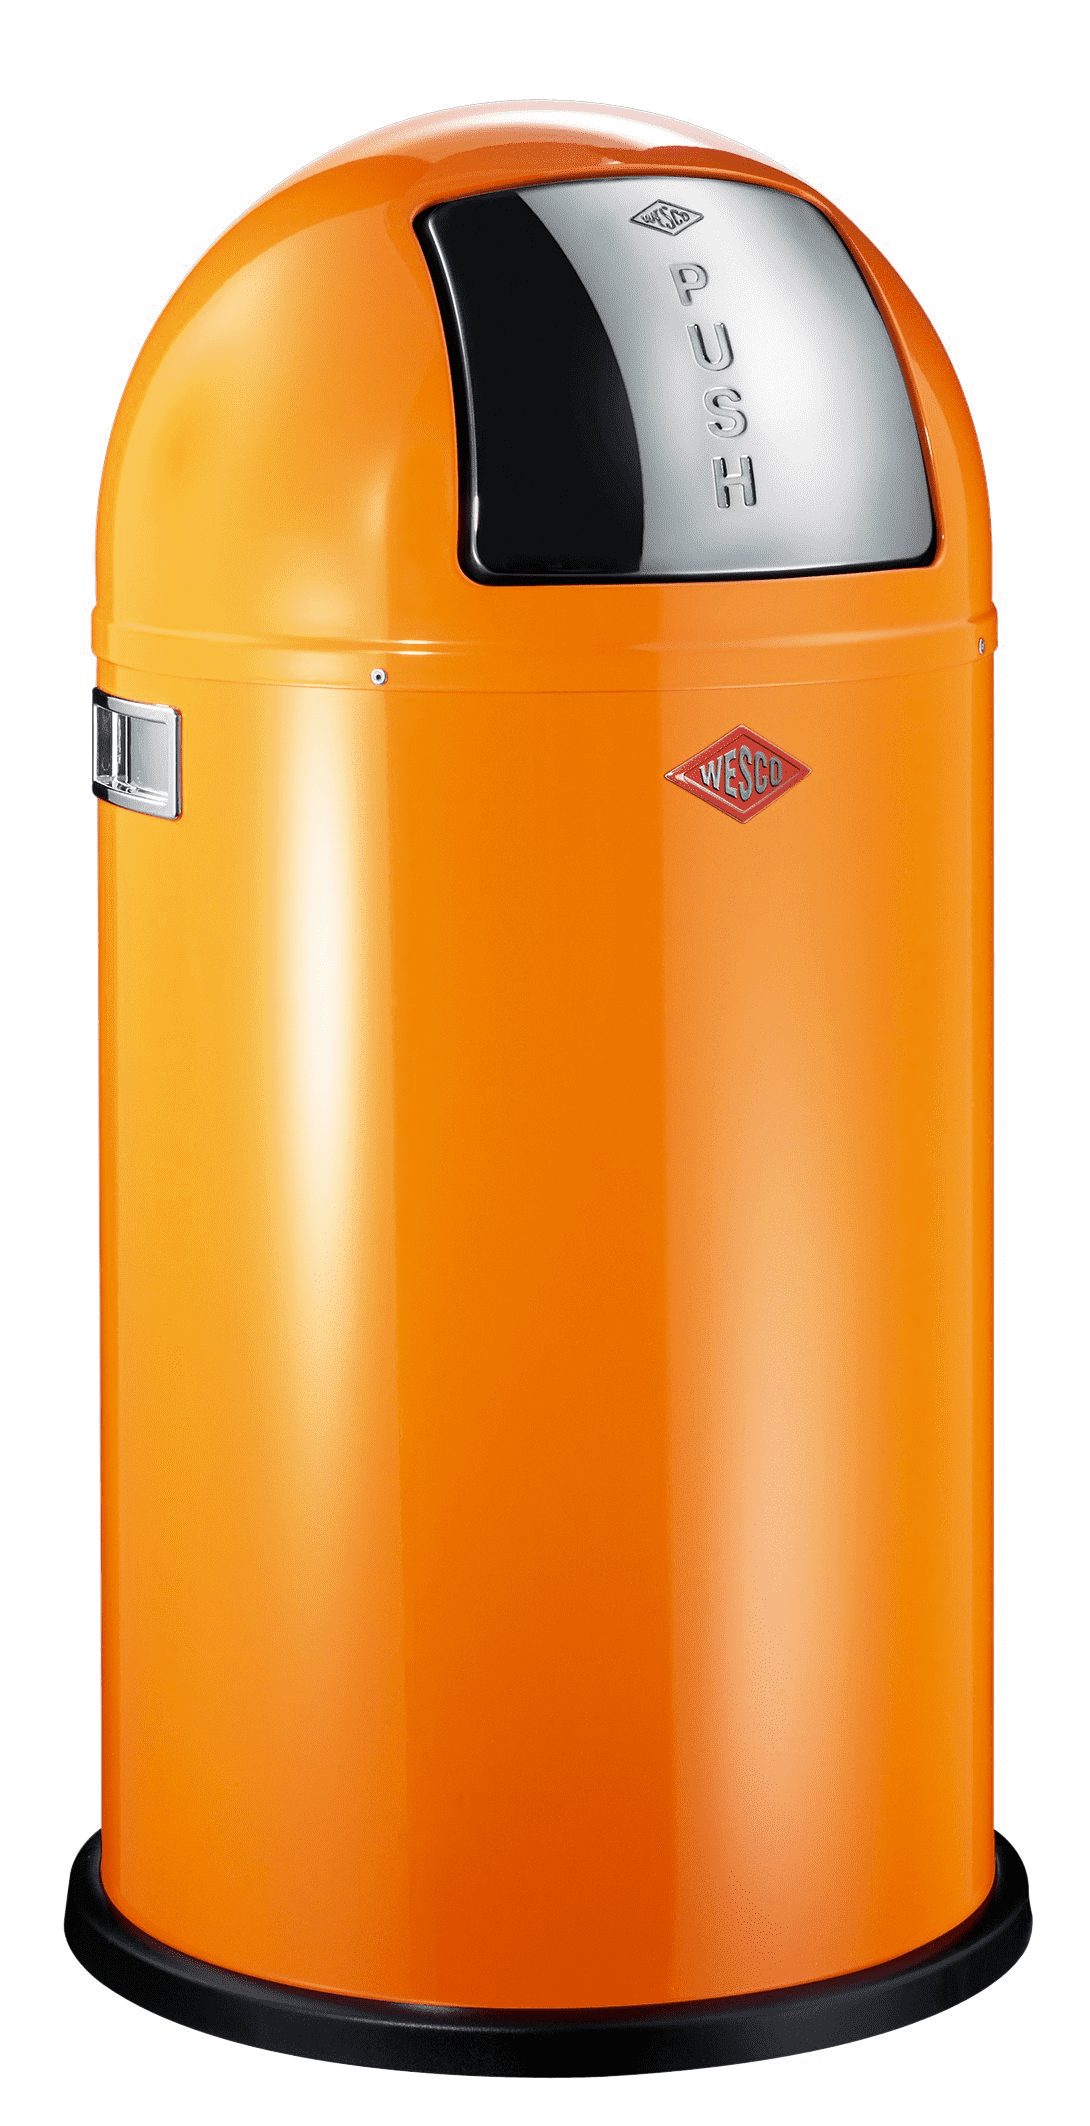 WESCO Einbaumülleimer Wesco Pushboy Abfallsammler - Orange, 50 Liter, Edelstahlkorpus